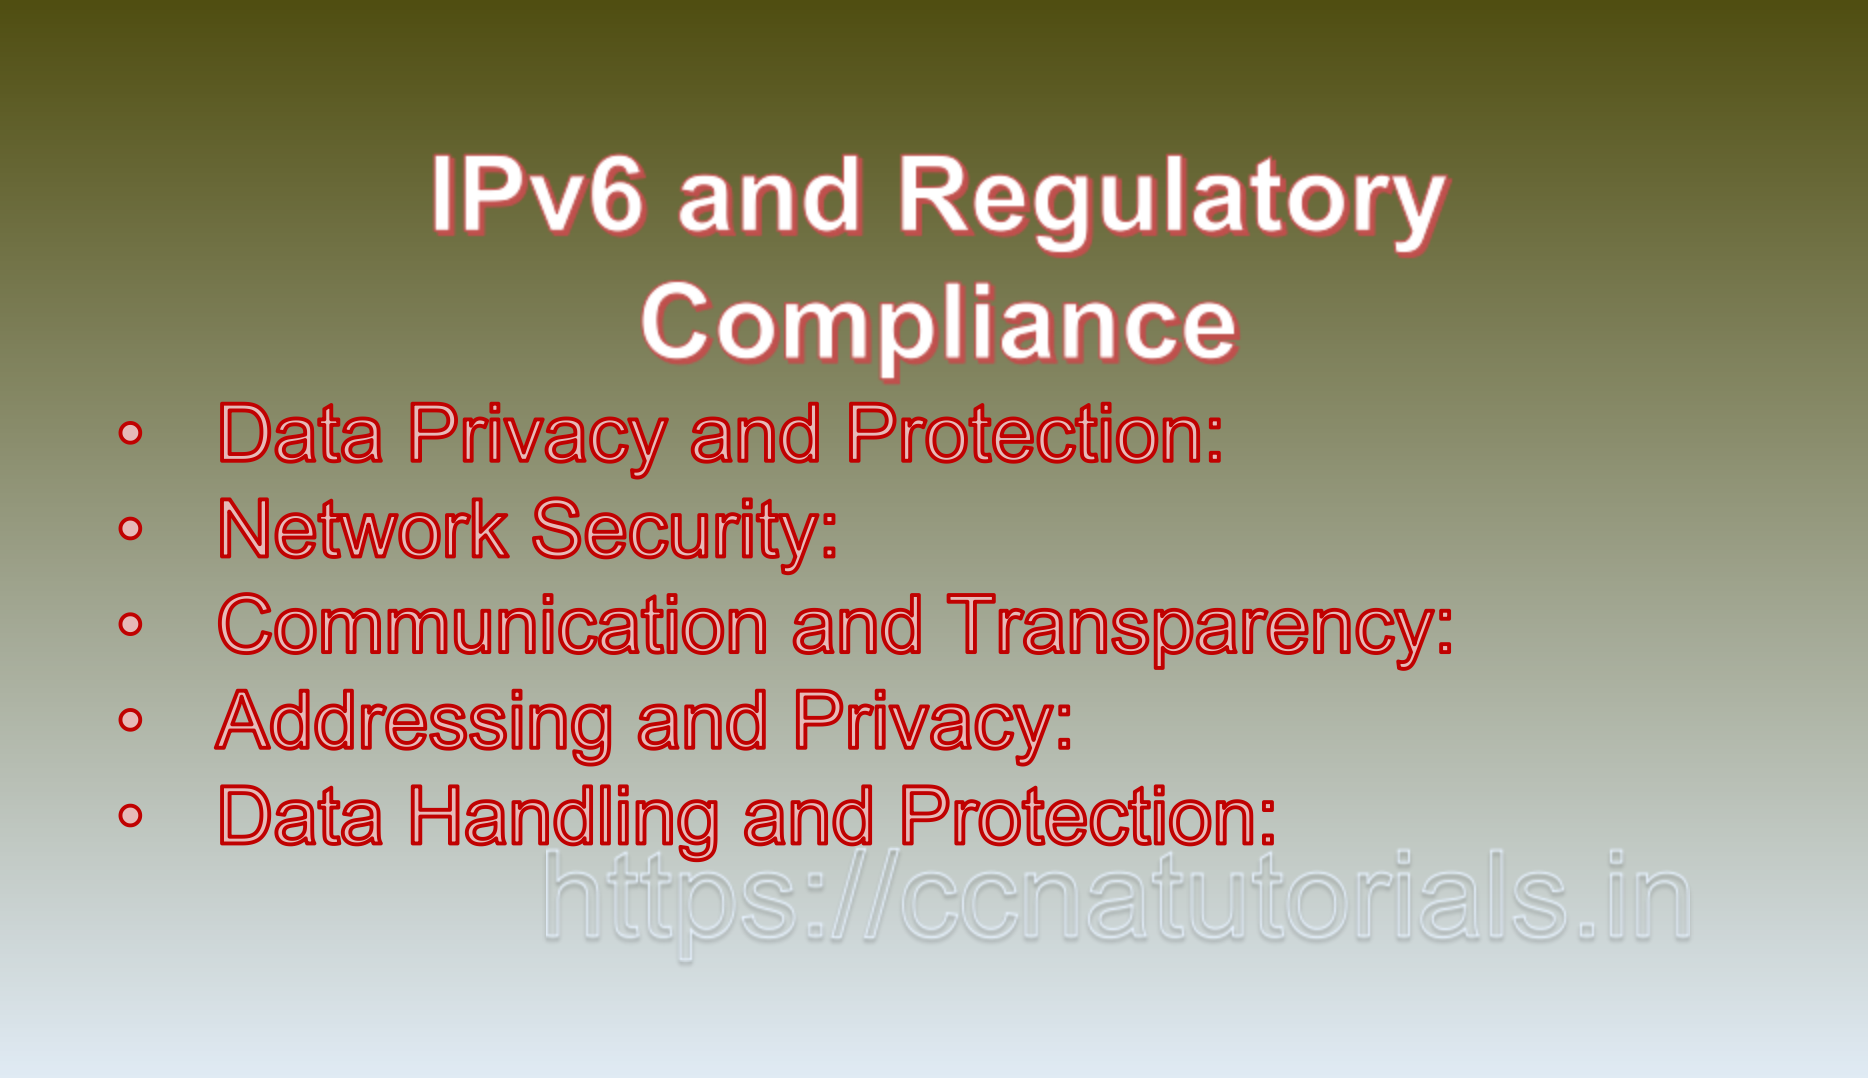 IPv6 and Regulatory Compliance, CCNA, CCNA TUTORIALS